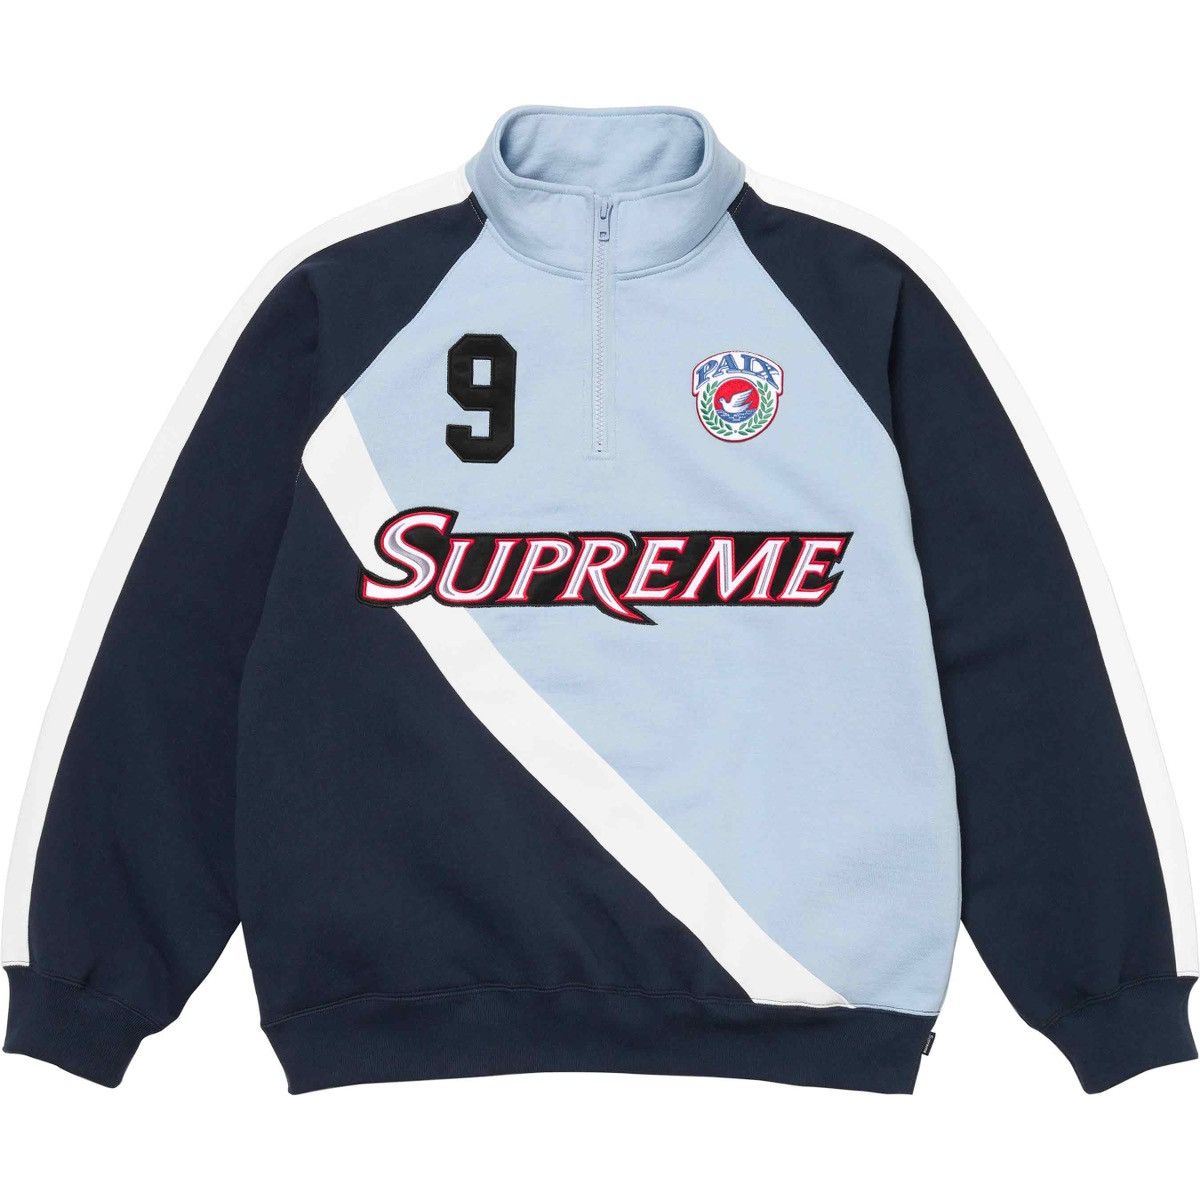 Supreme Supreme Equipé Half Zip Sweatshirt | Grailed